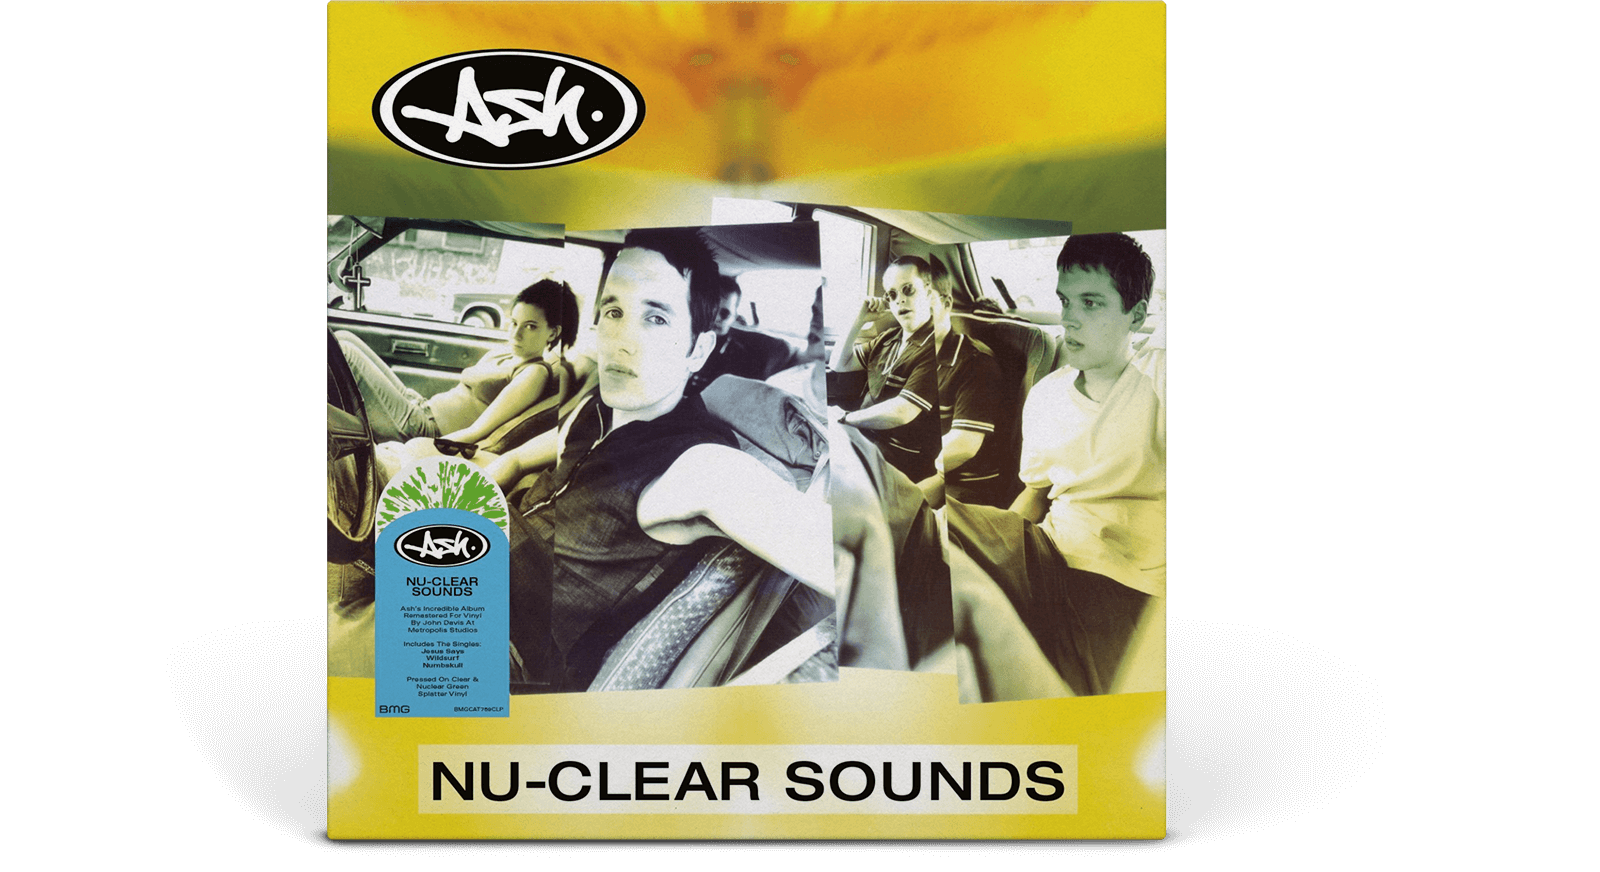 Ash(アッシュ) Nu-Clear Sounds レコードUK版 - 洋楽